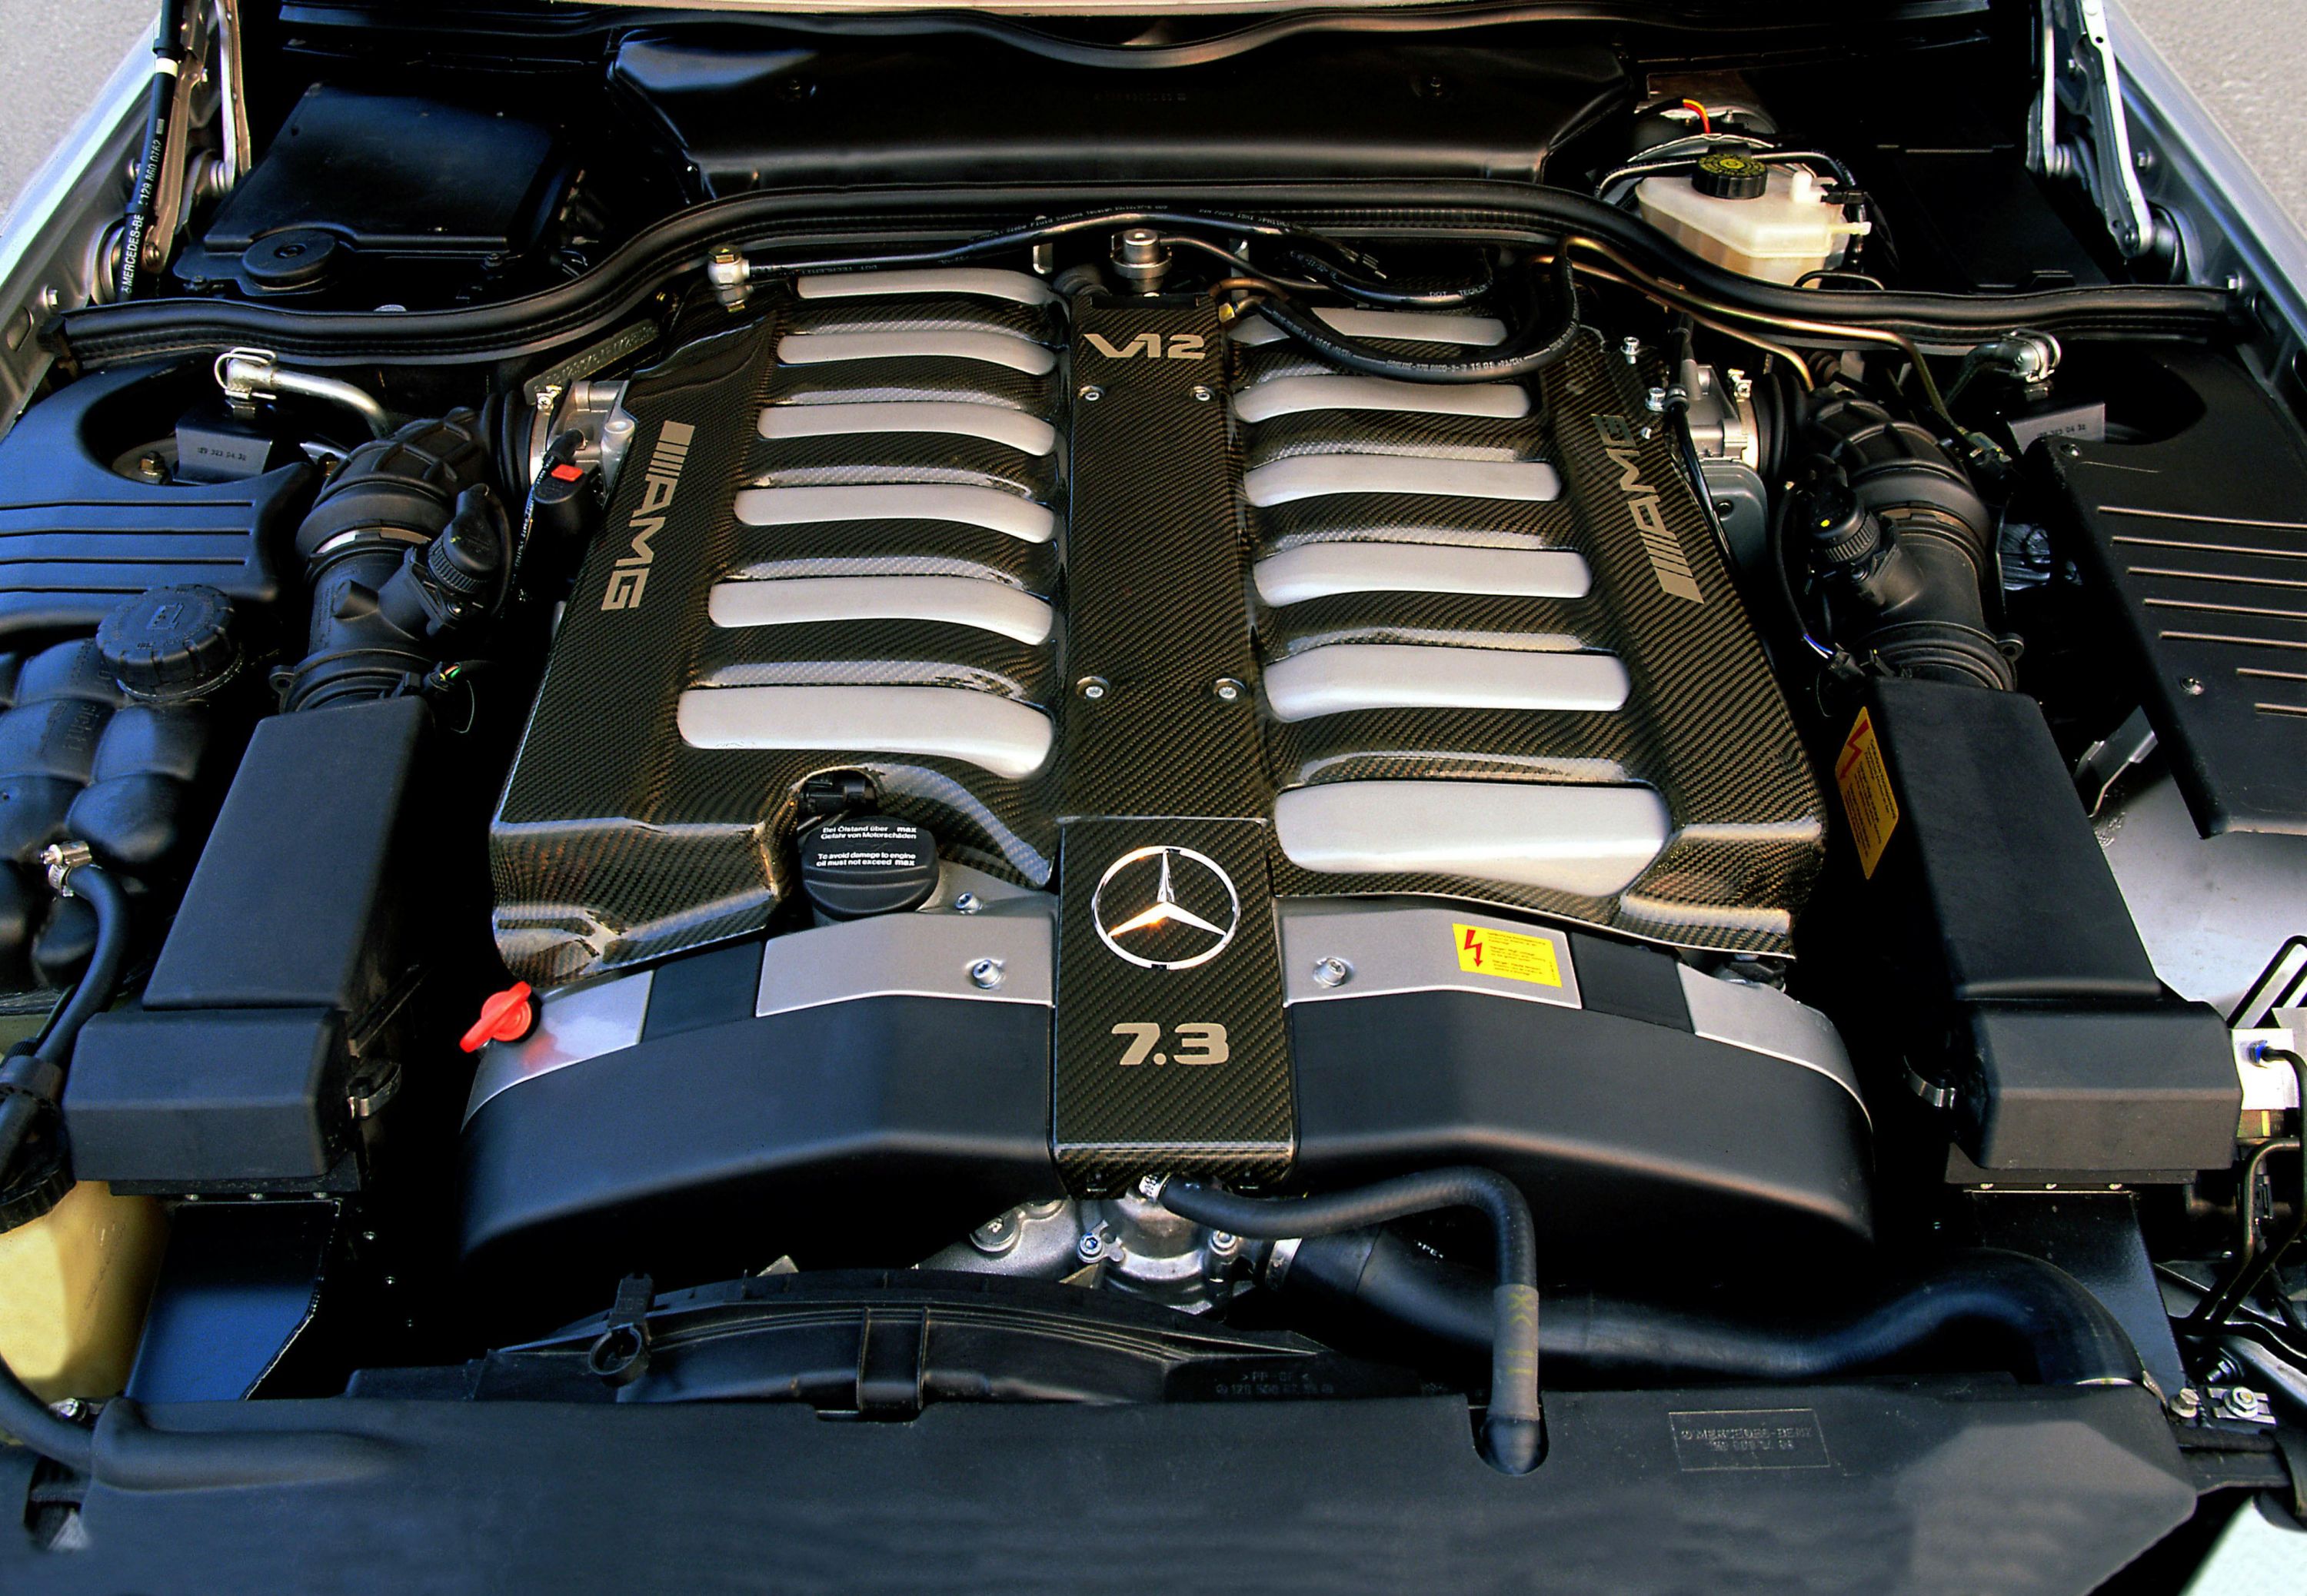 124 сколько лошадей. Mercedes-Benz sl73 AMG. V12 двигатель Mercedes 600s. Мерседес 140 v12 мотор. Мерседес Бенц АМГ мотор v12.